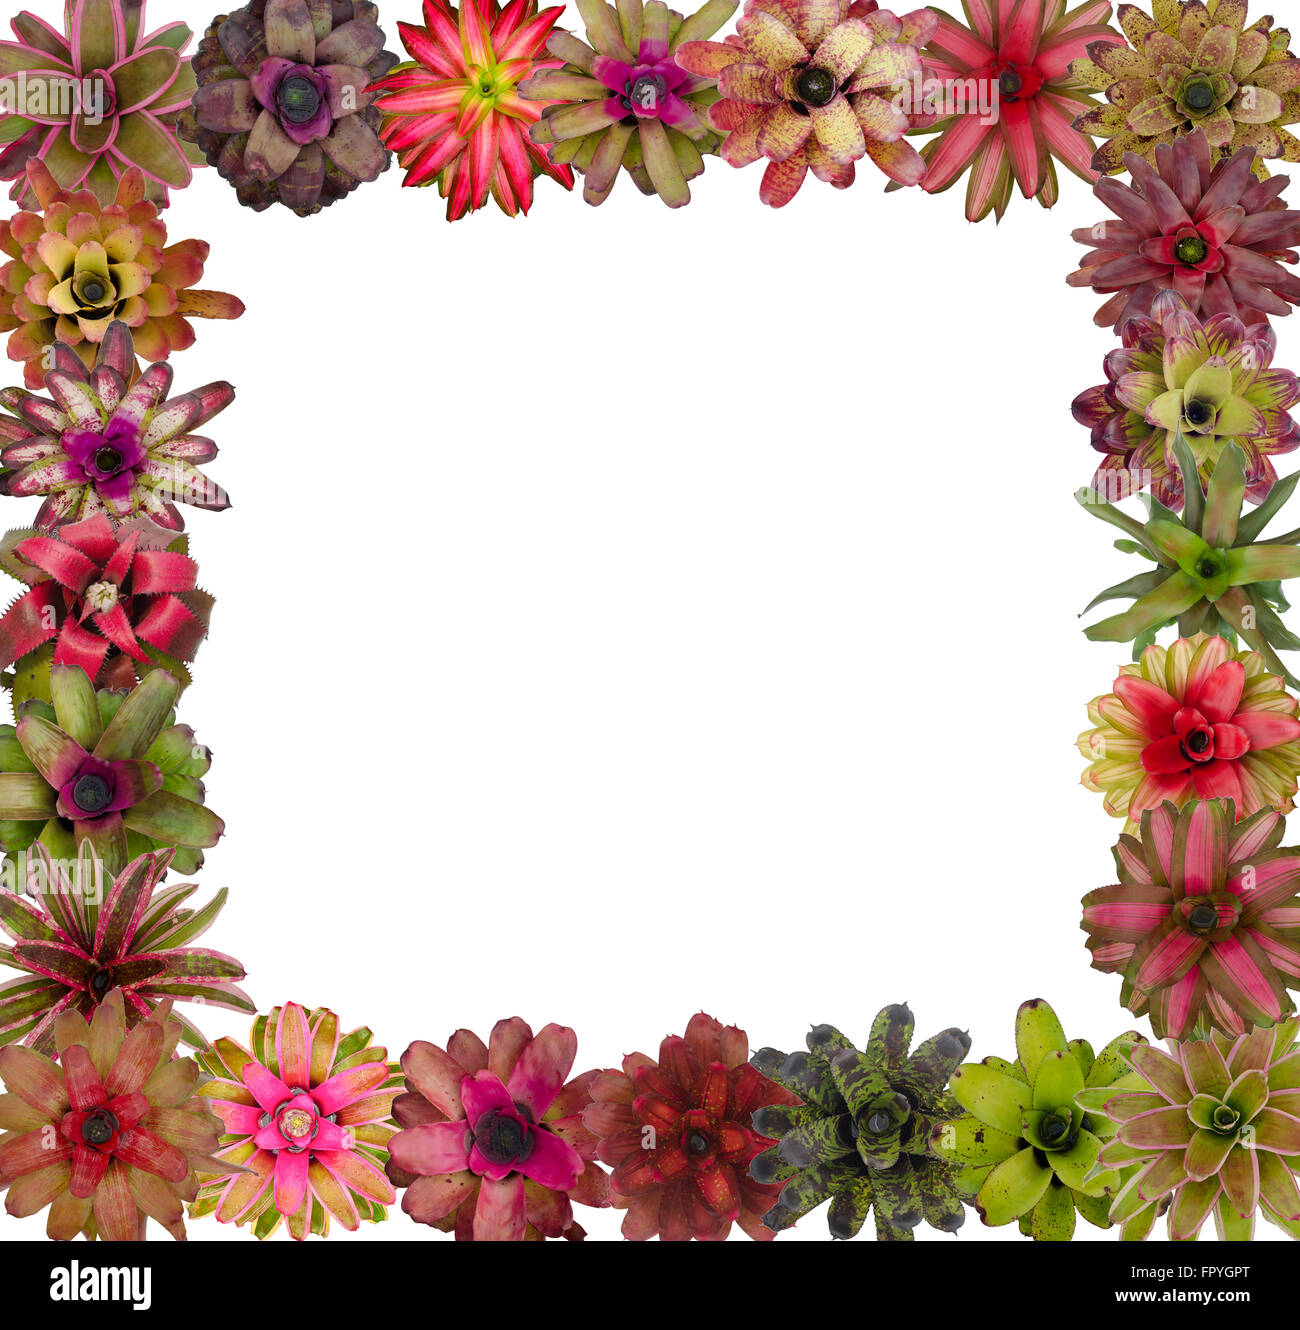 bromeliad frame isolated on white background Stock Photo